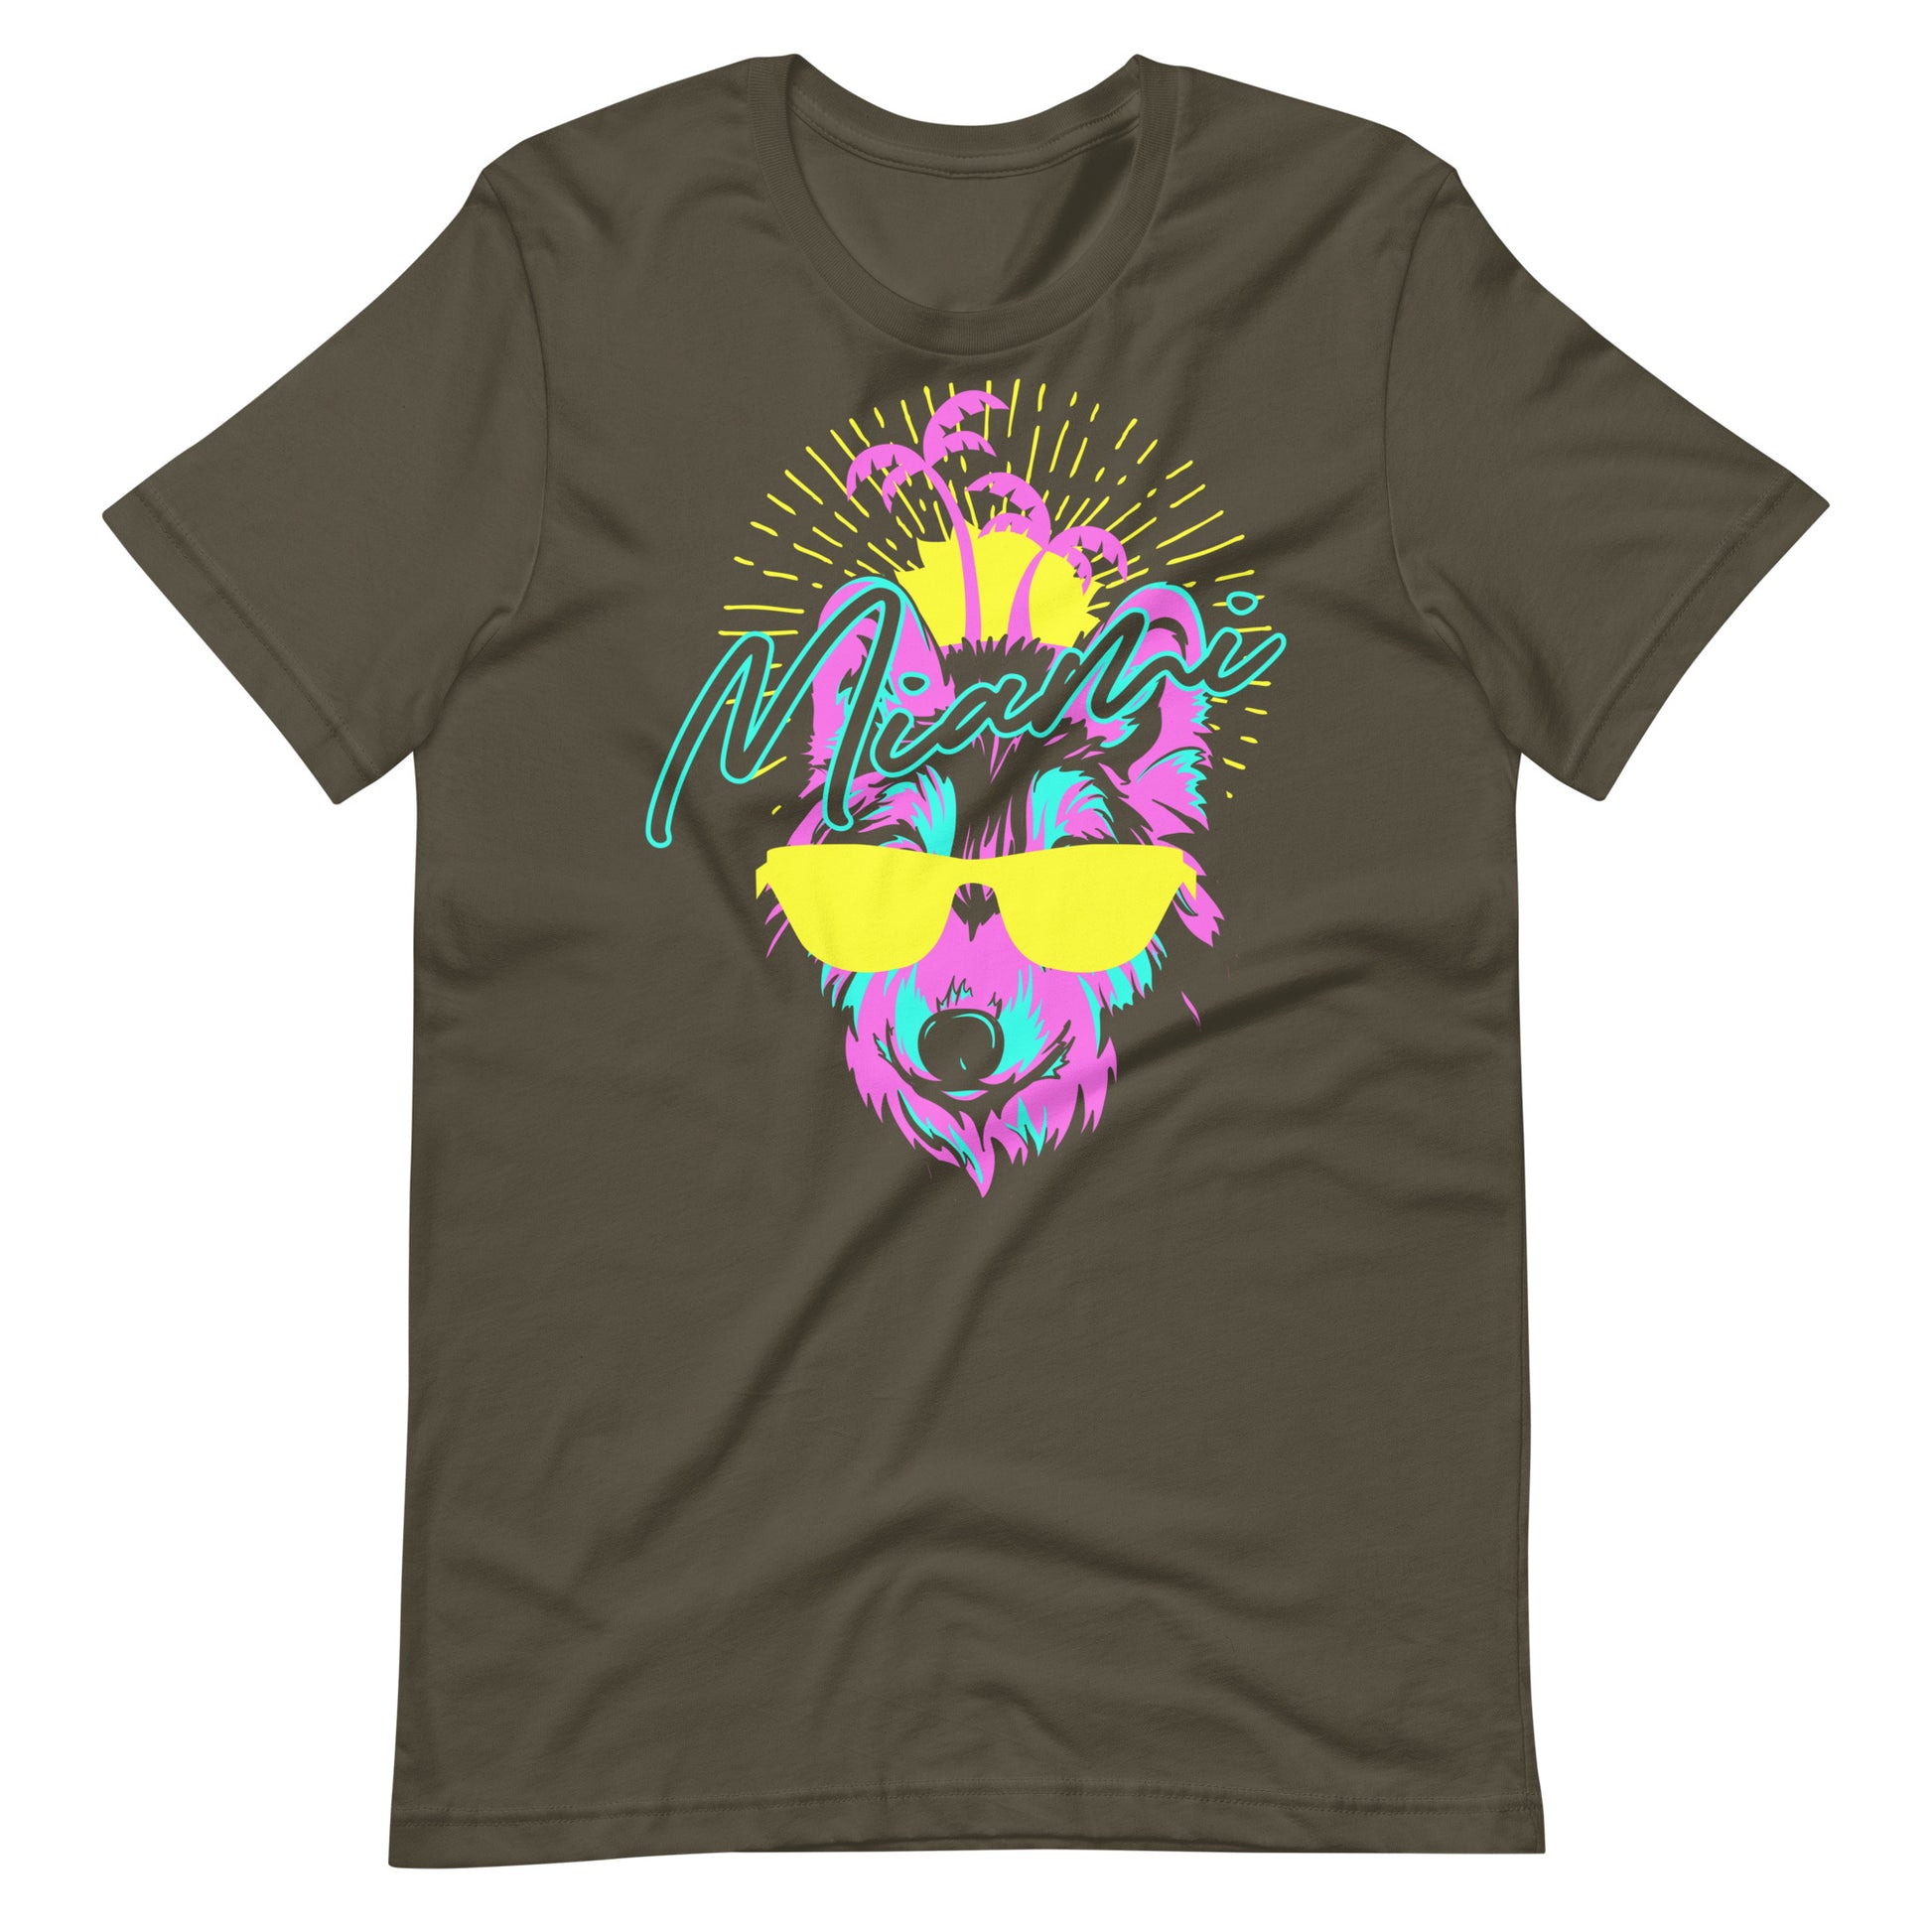 Printagon - Miami Wolf - Unisex T-shirt - Army / S